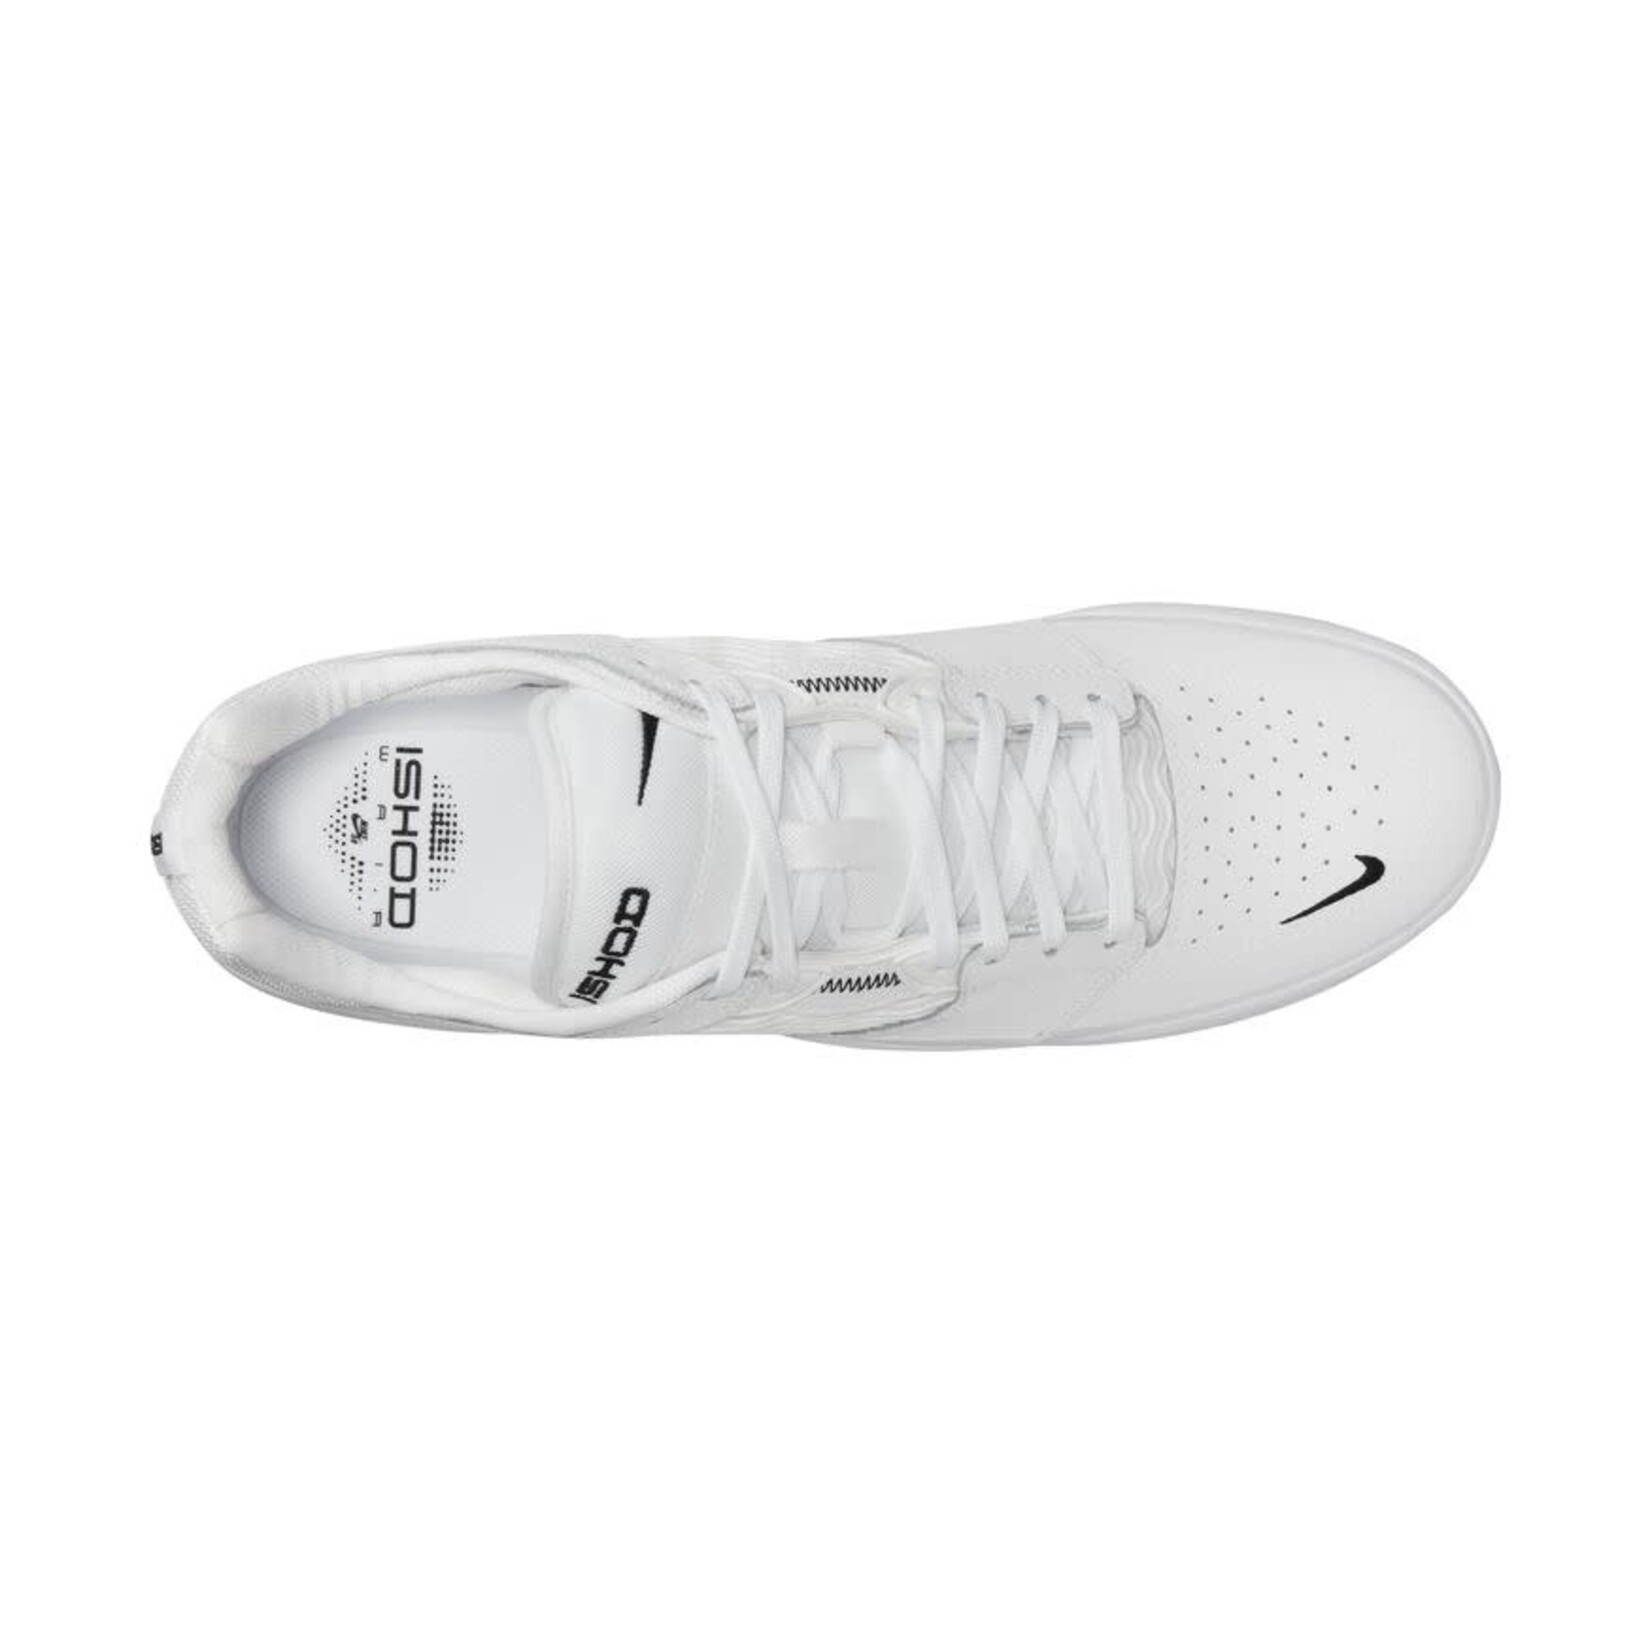 Nike SB Nike SB Ishod Wair Premium Black/White-Black